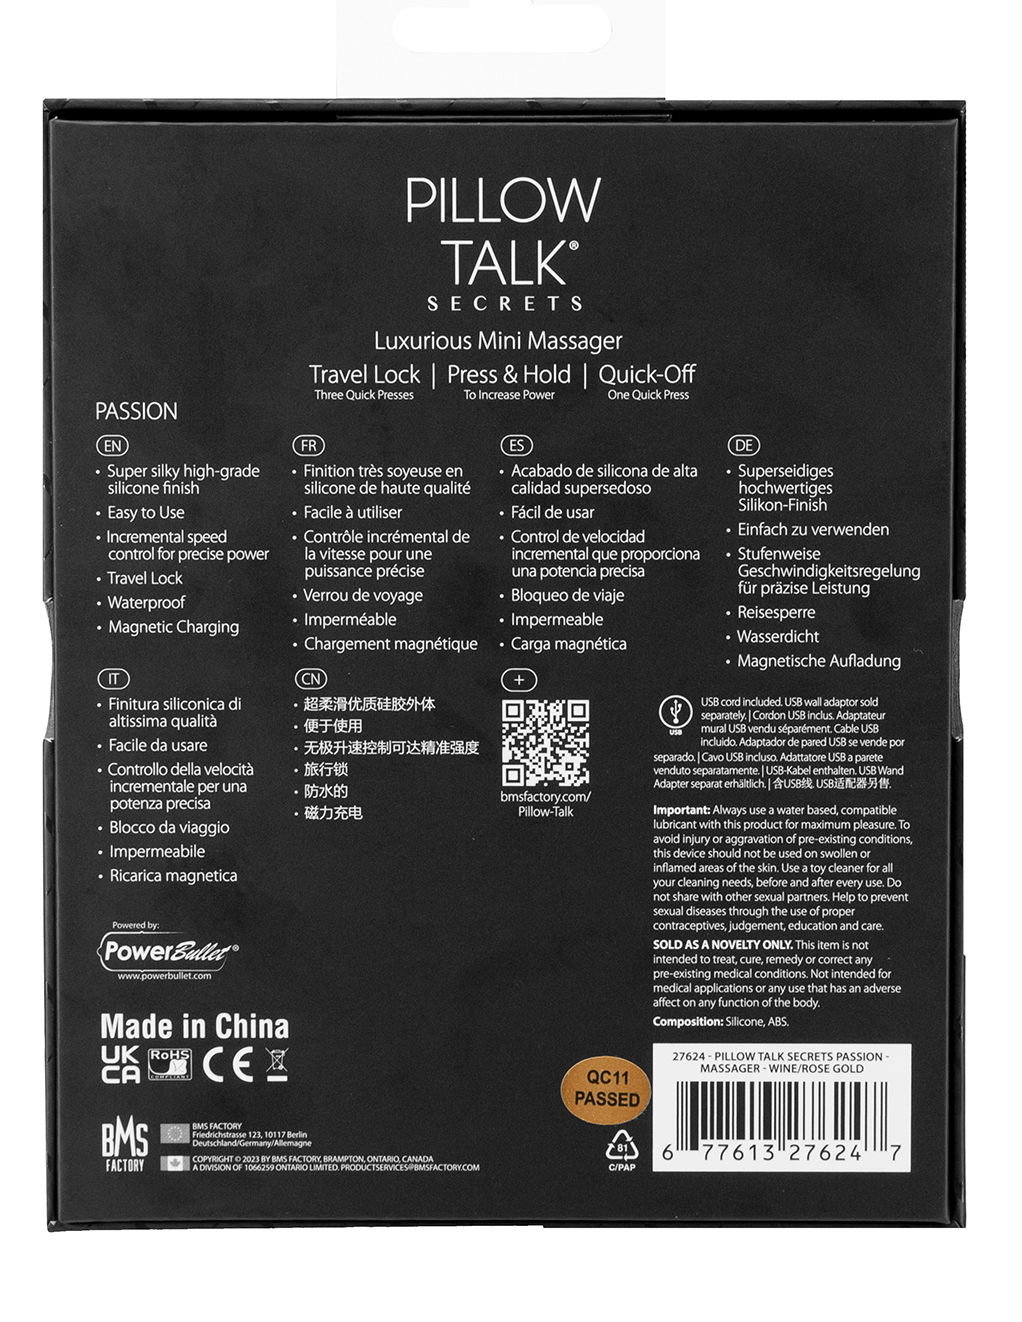 Pillow Talk Passion - Wine - Box Back